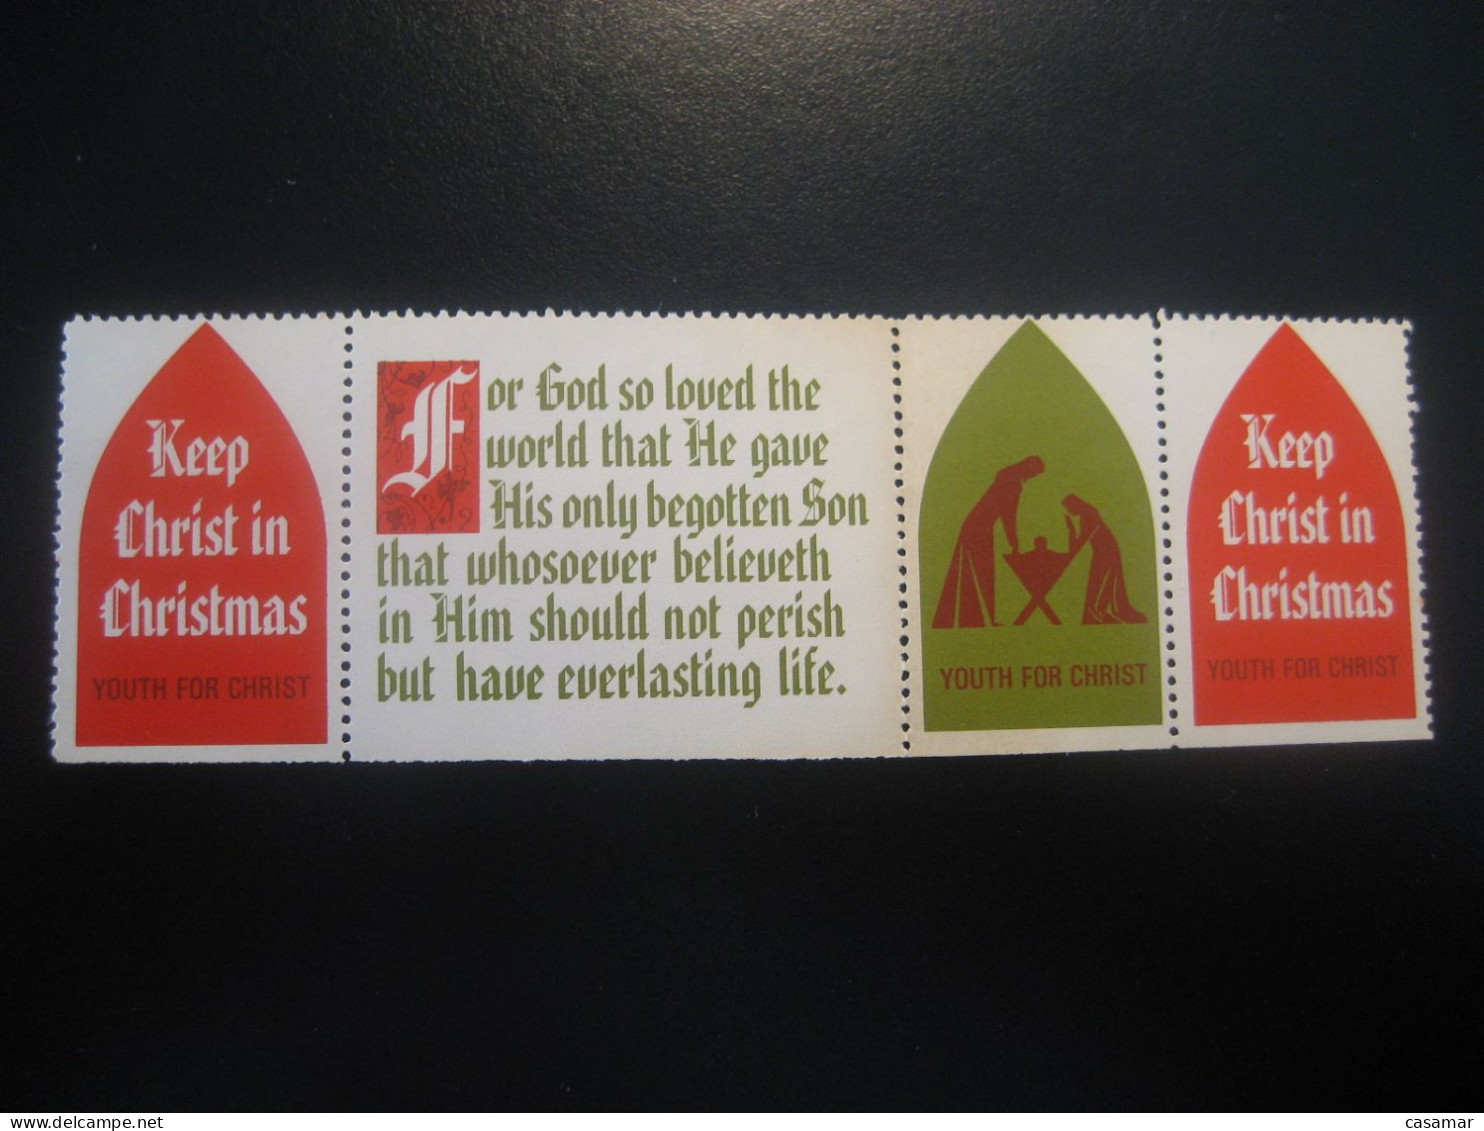 Keep Christ In Christmas 4 Poster Stamp Vignette USA Label - Christentum